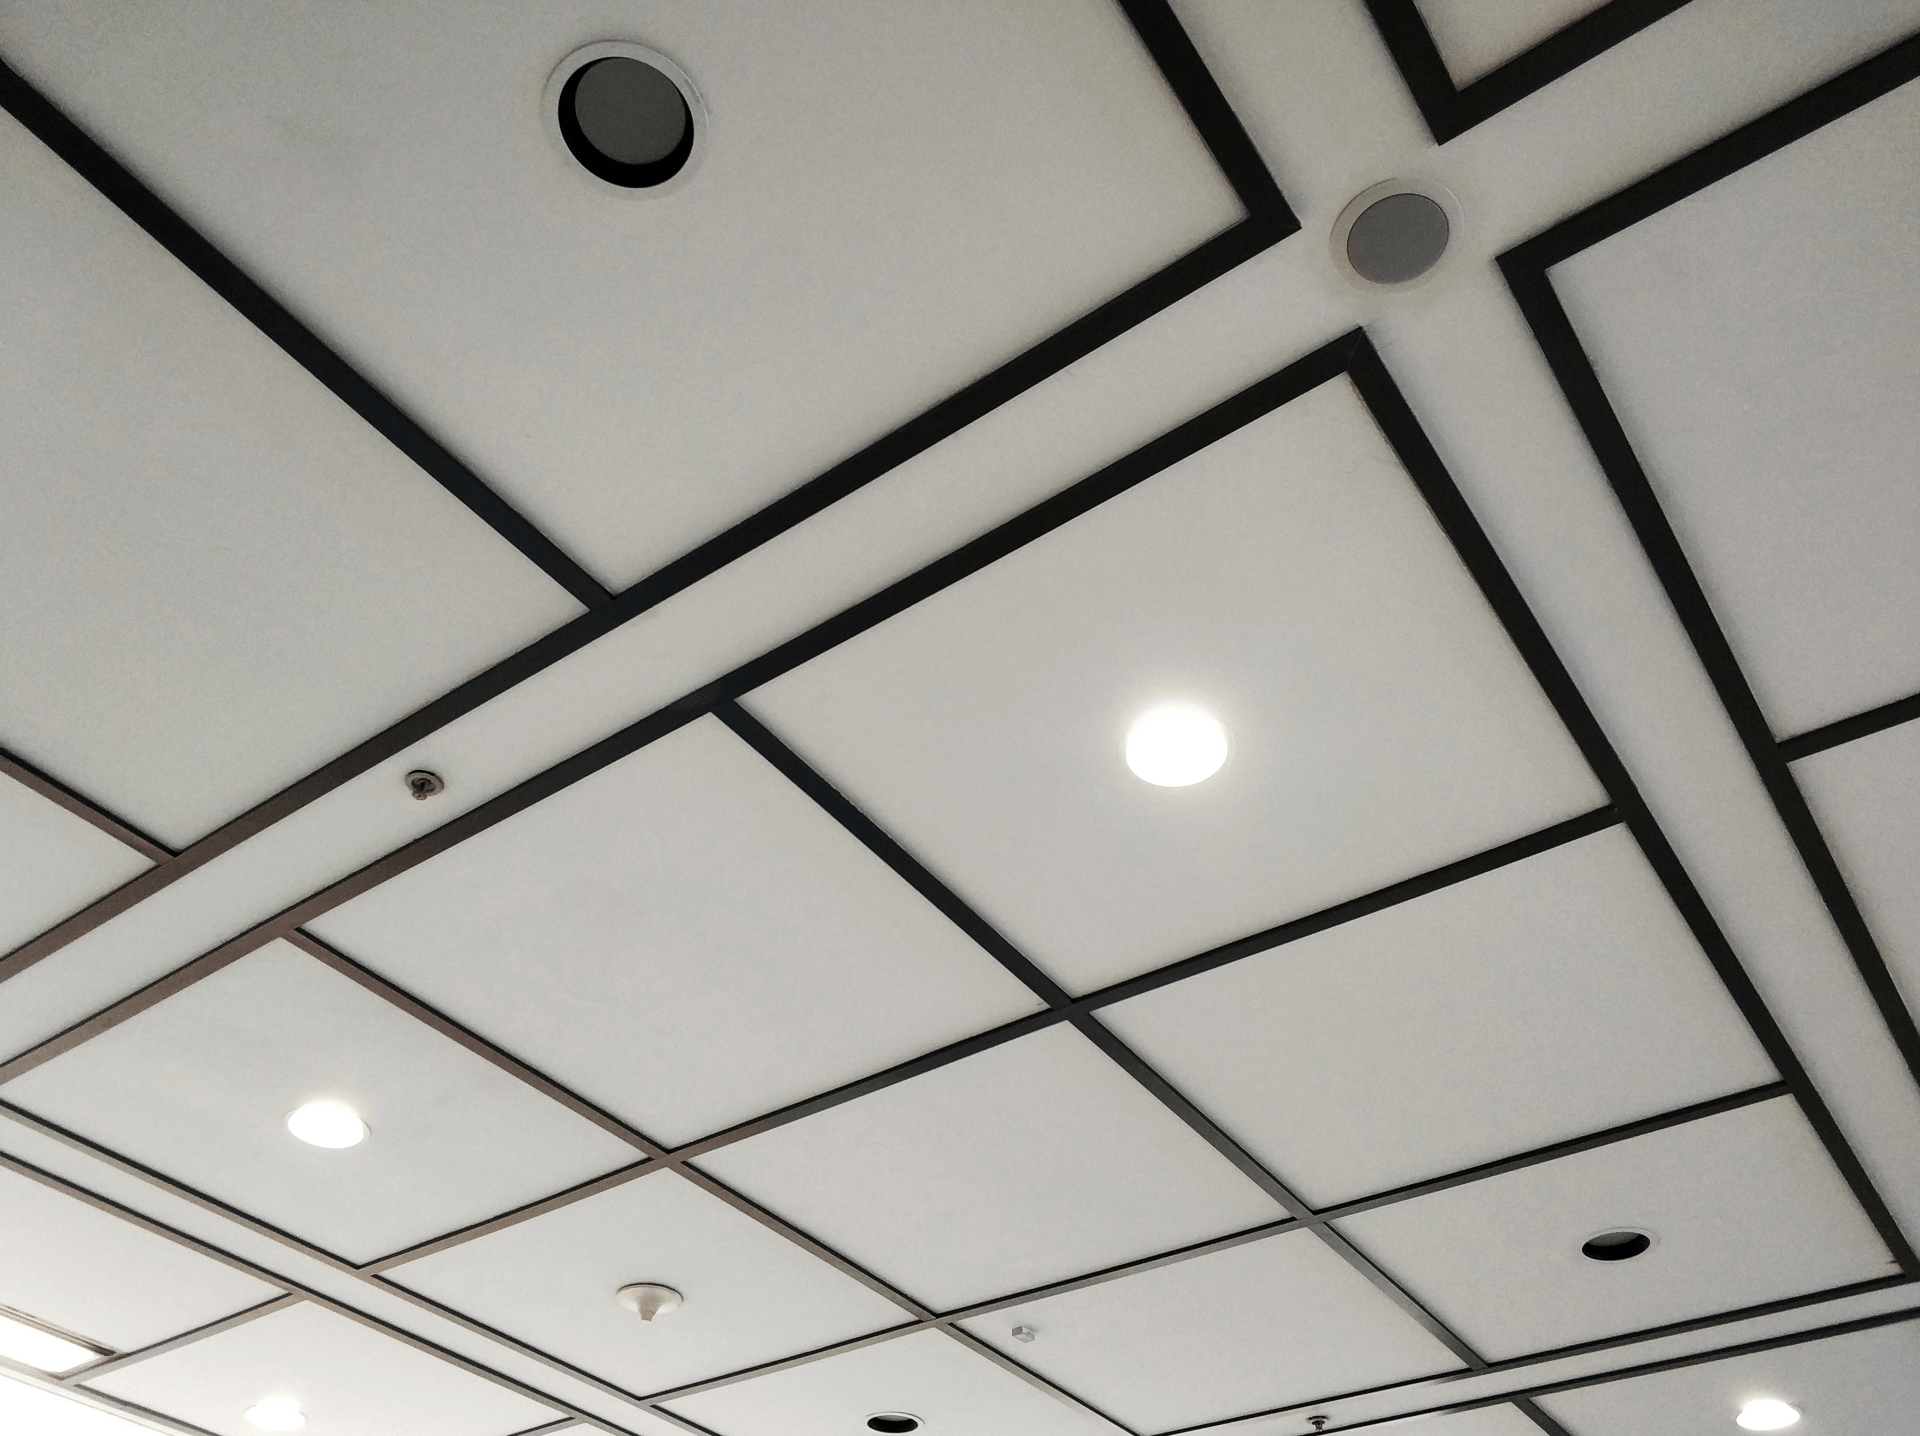 Drop Ceiling Installation